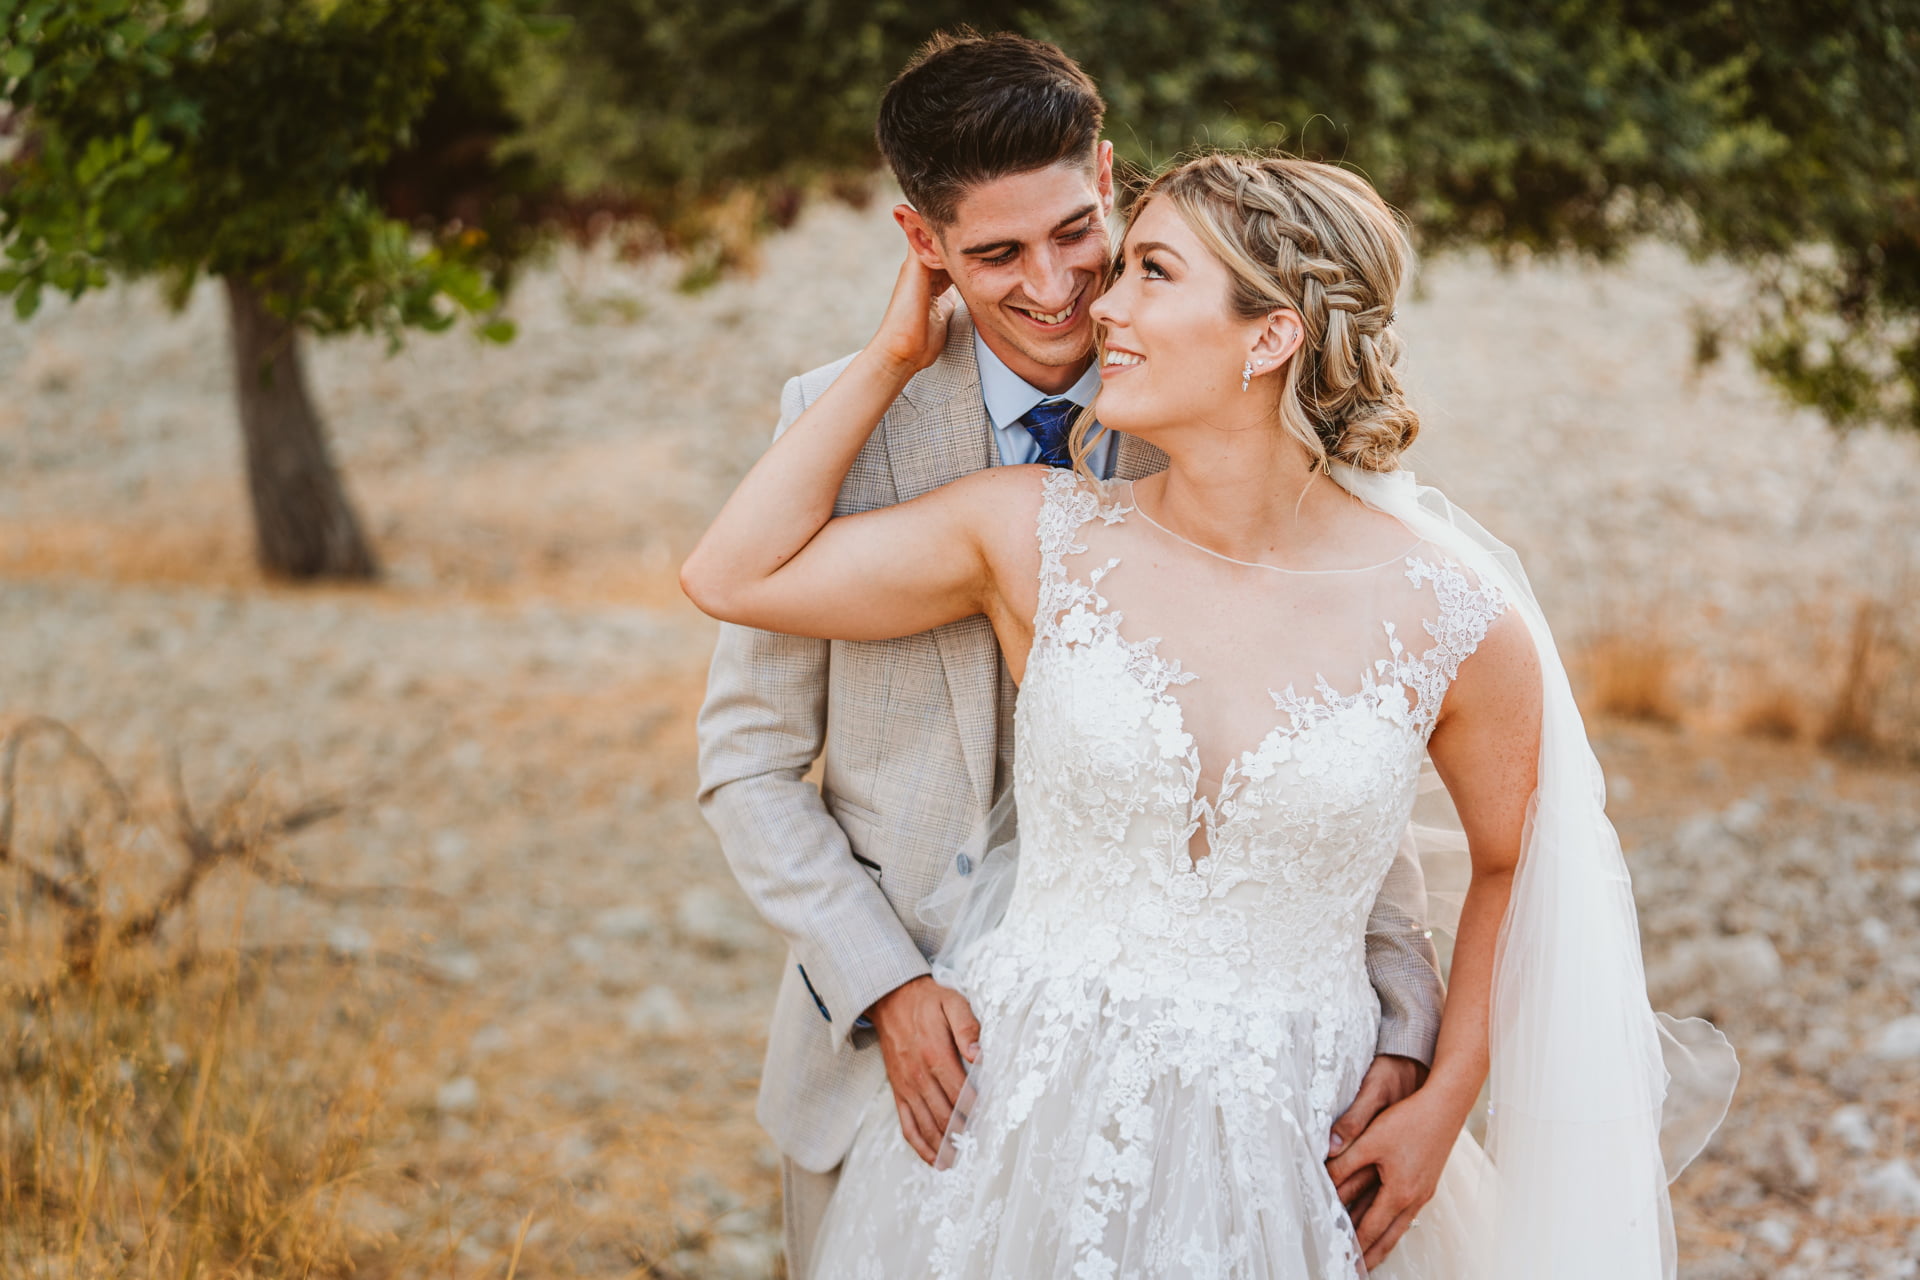 Go behind the scenes of our 1st Cyprus wedding since covid-19 as Vasilias wedding photographer for Liam & Chloe dream destination wedding.